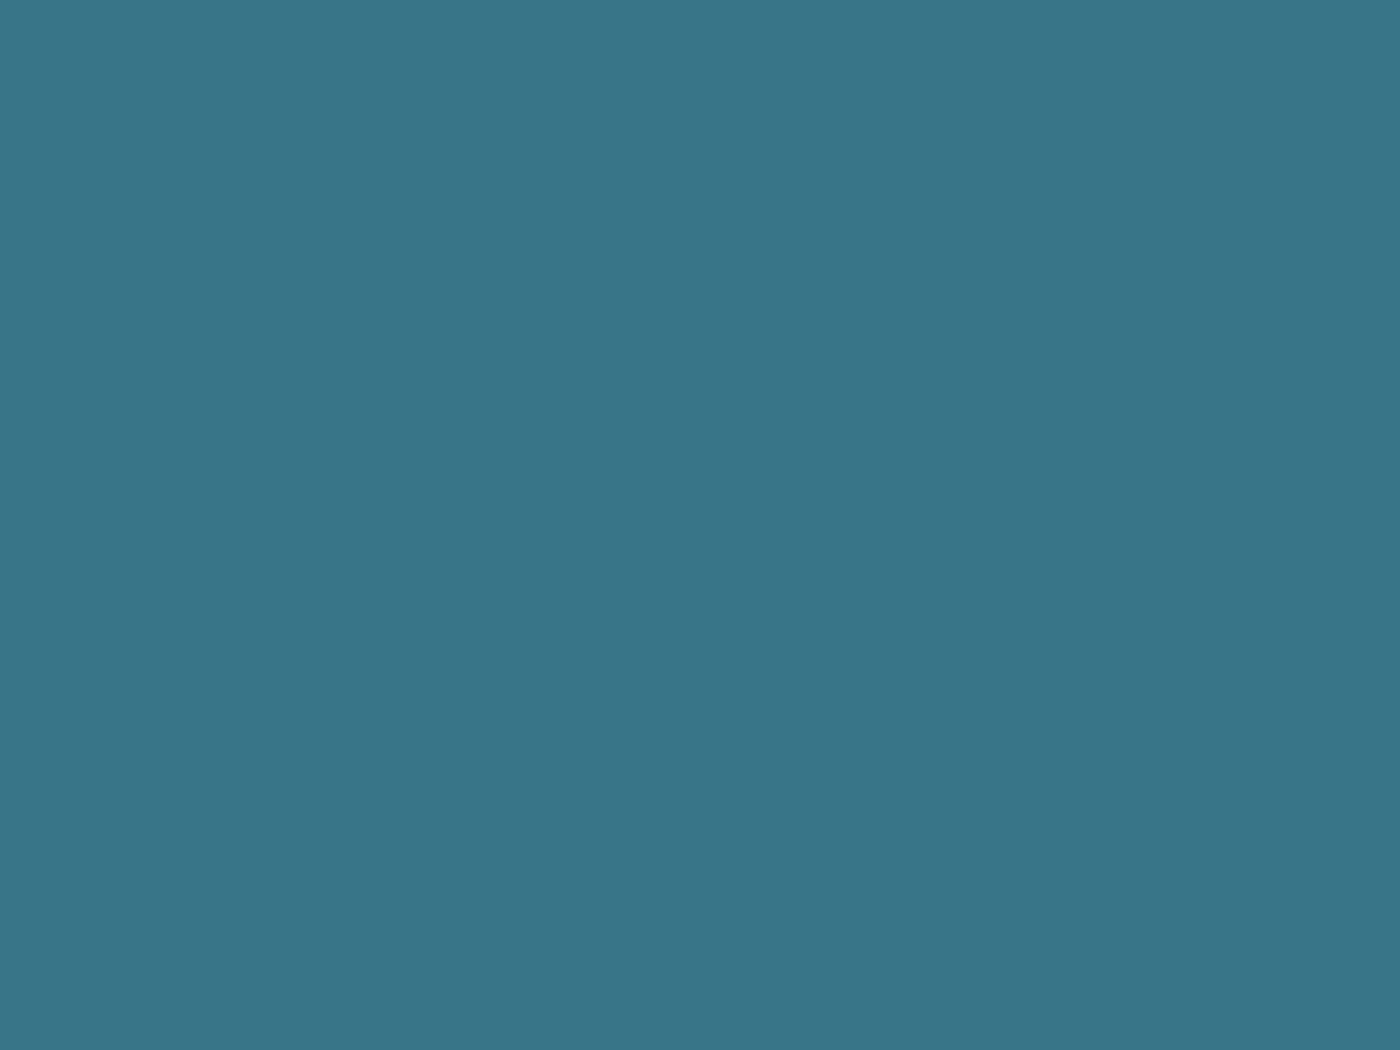 1400x1050 Teal Blue Solid Color Background